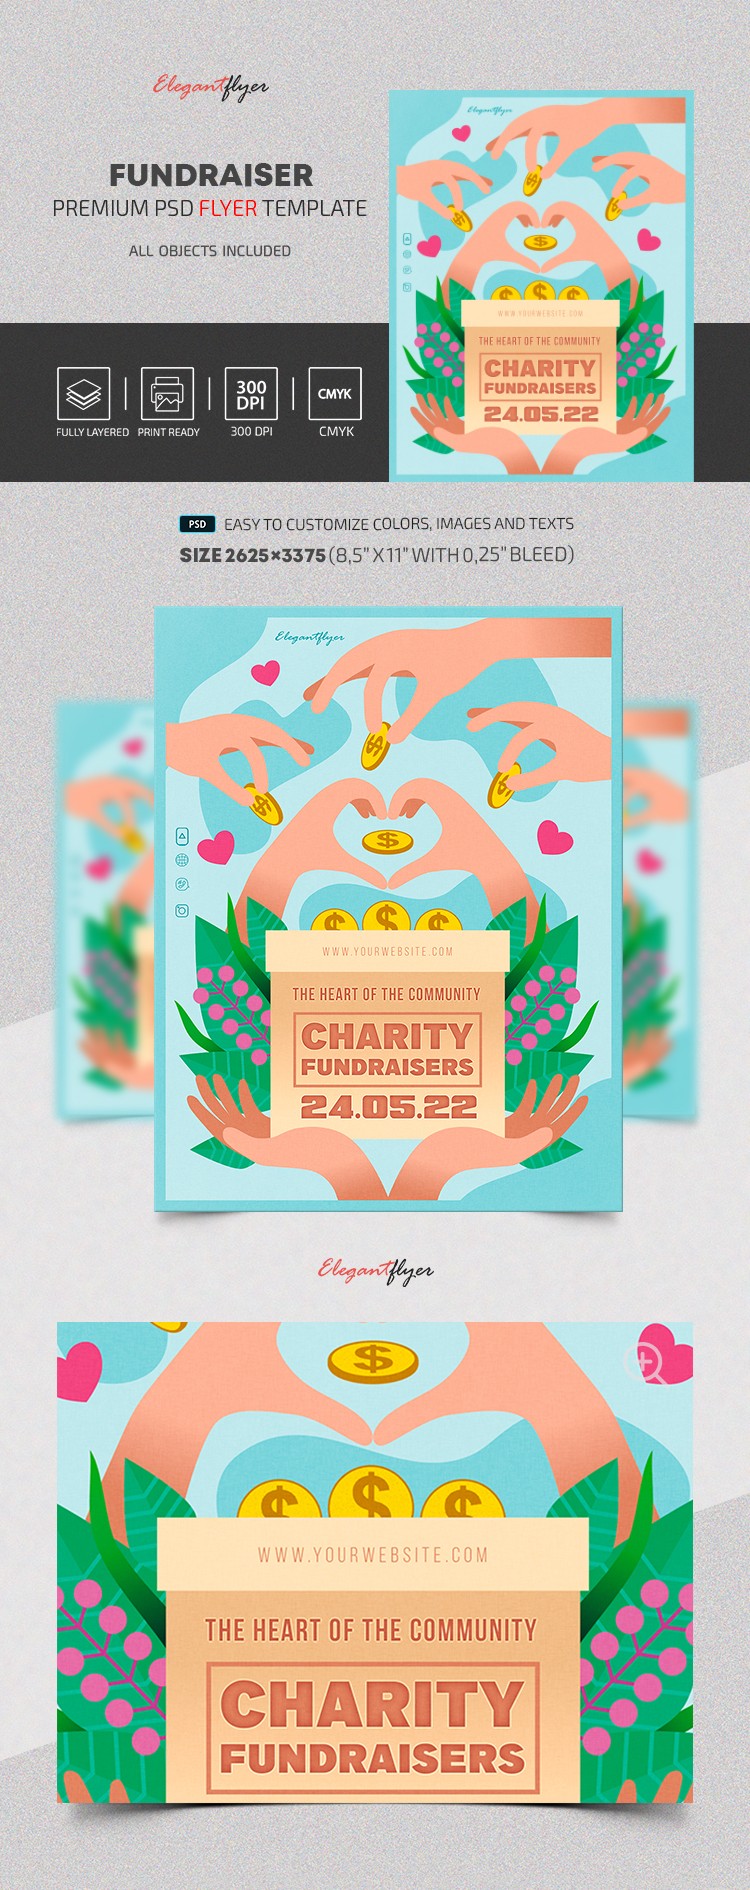 Fundraiser Flyer by ElegantFlyer